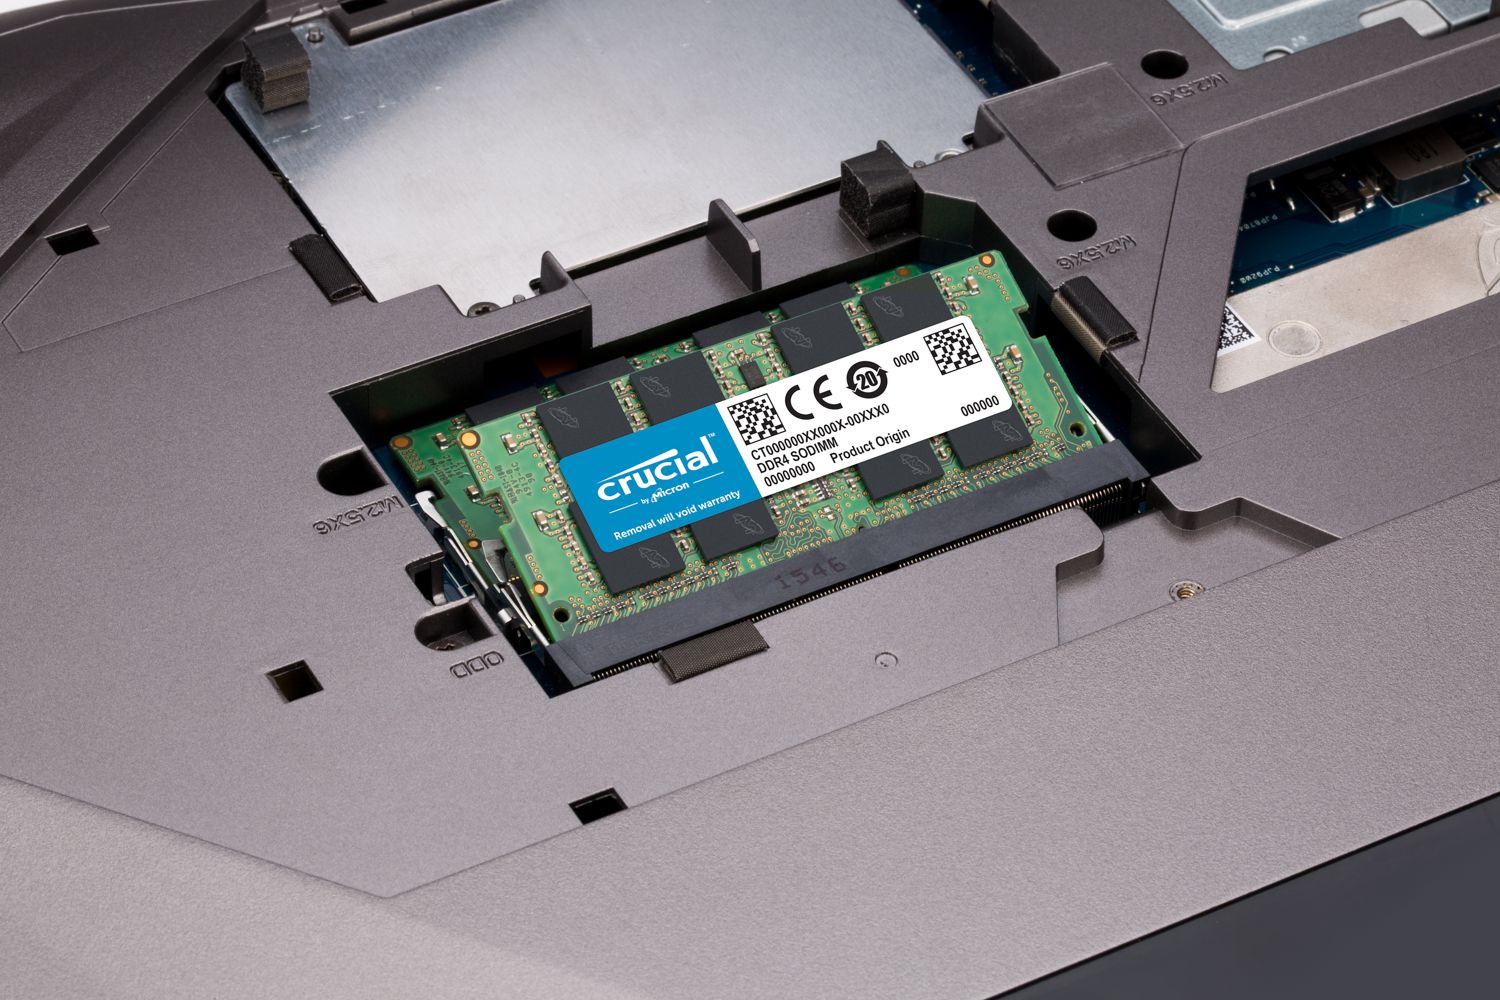 Crucial 8GB Kit (4GBx2) DDR4 3200 MT/s (PC4-25600) CL22 SR x16 SODIMM  260-Pin Memory - CT2K4G4SFS632A CT2K4G4SFS632A